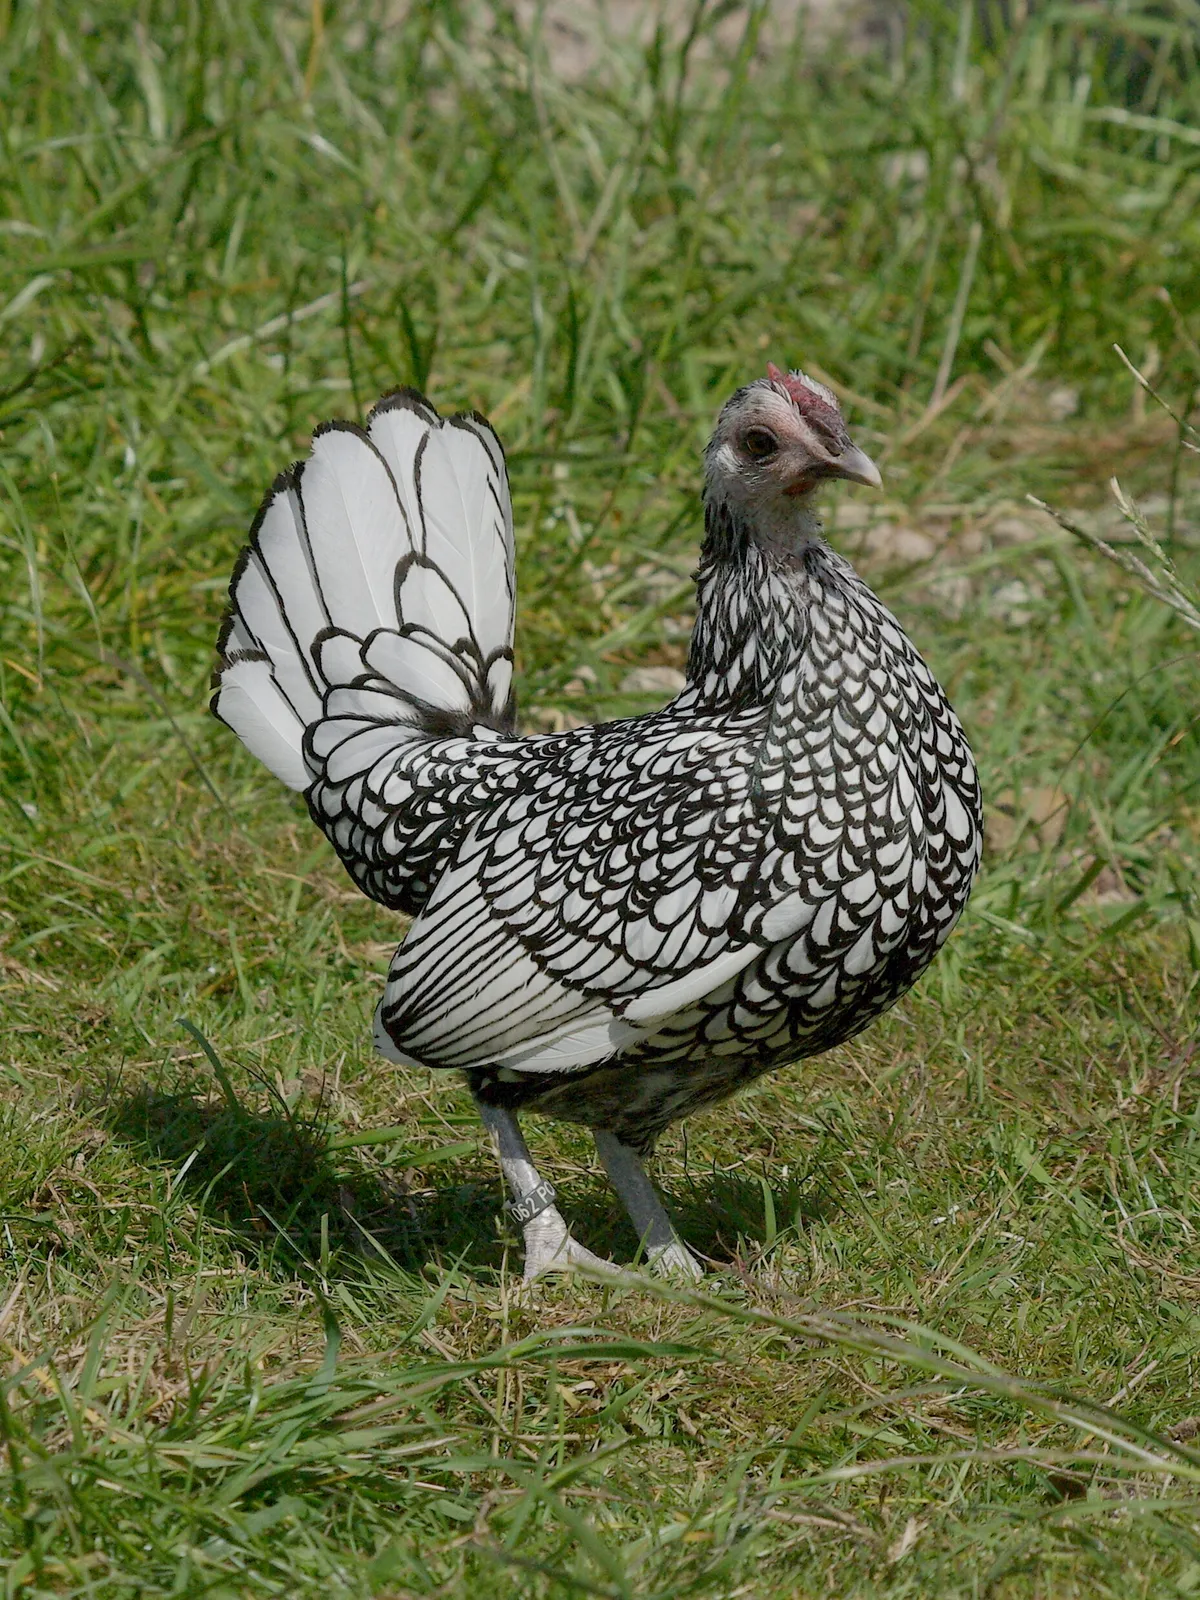 Silver Sebright female chicken standing on grass